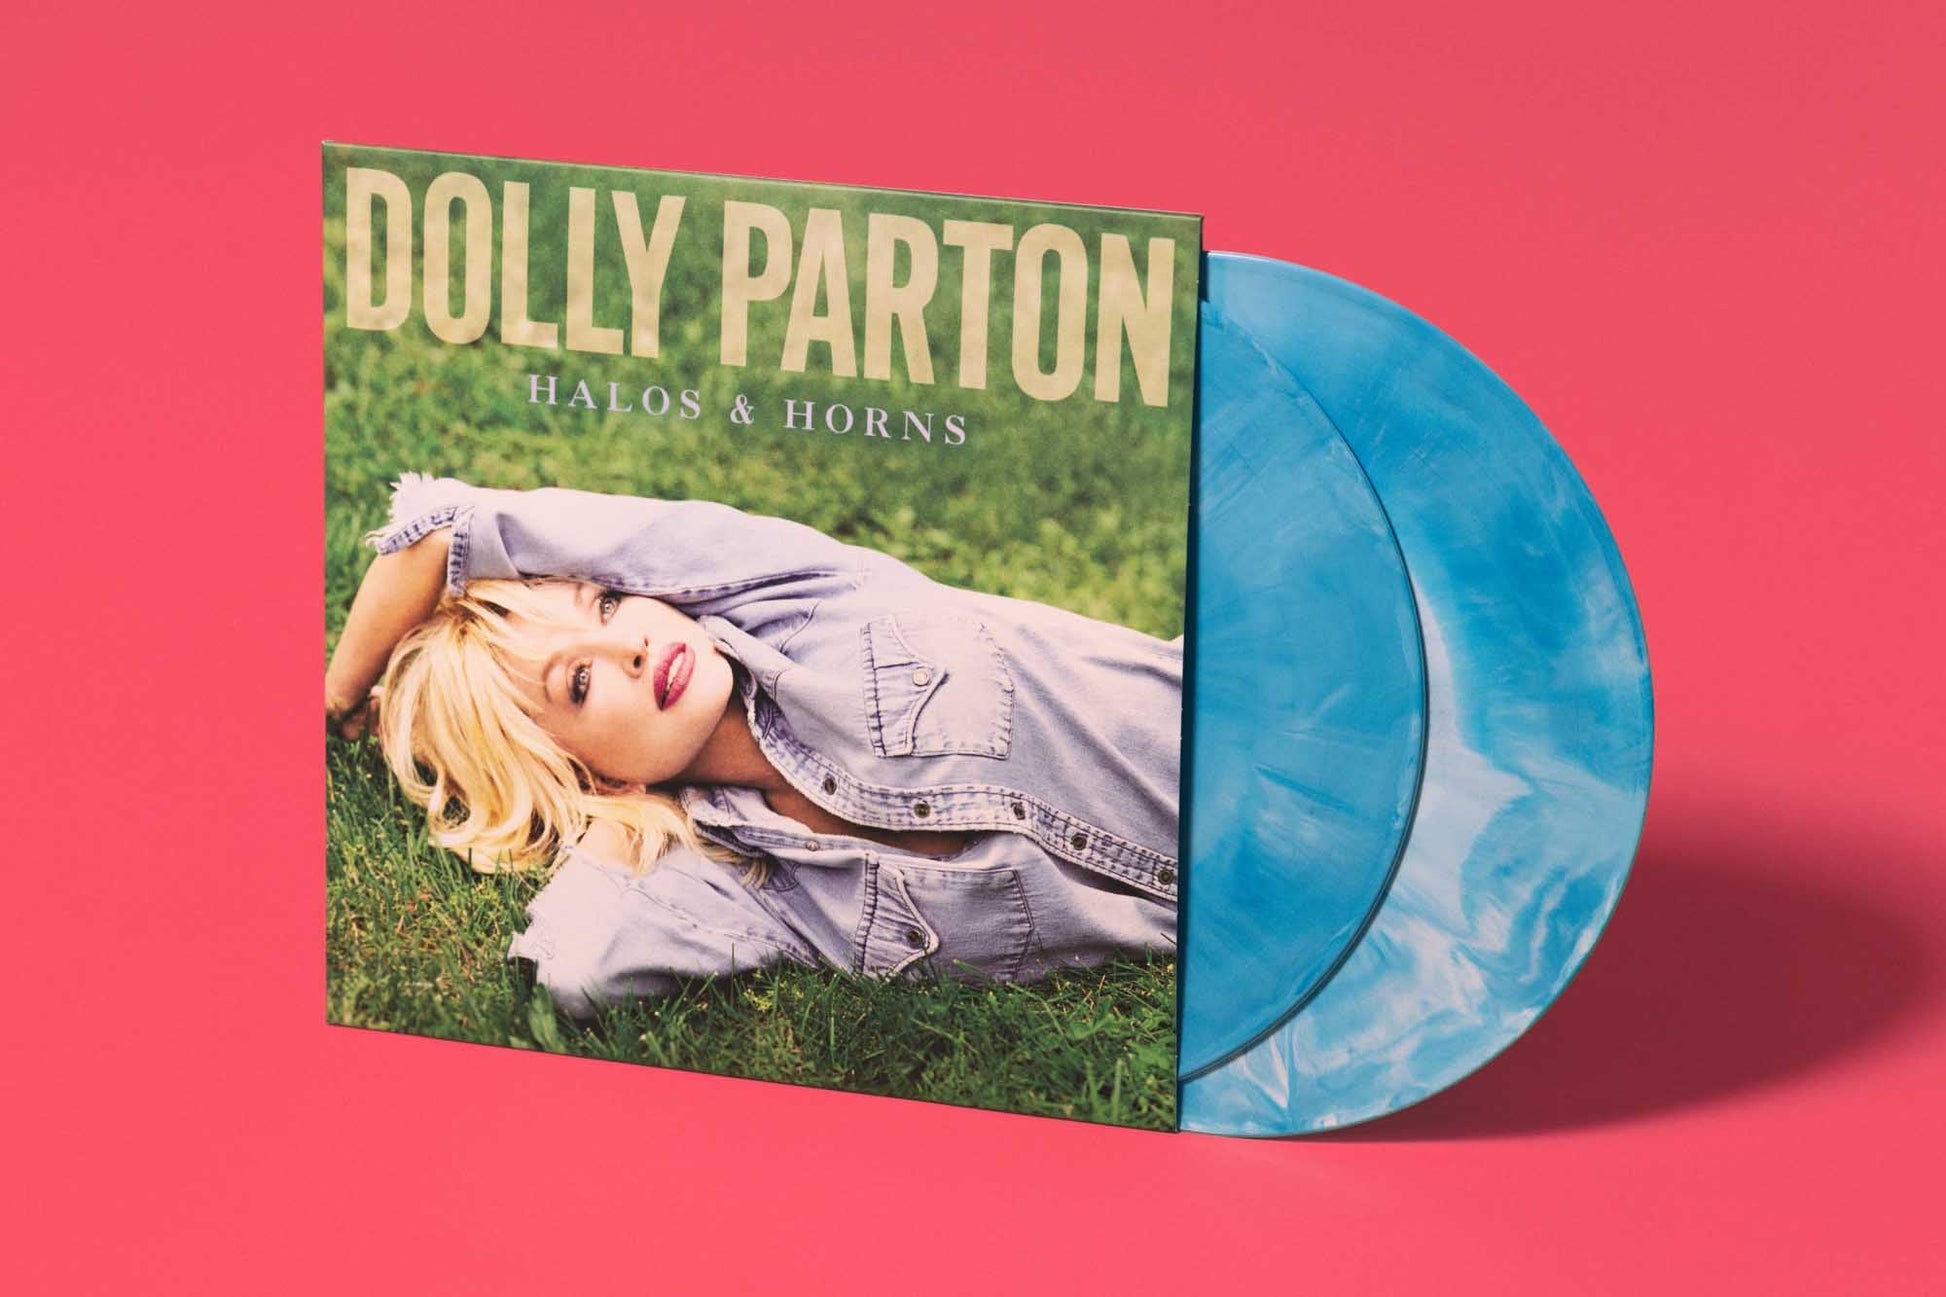 Dolly Parton Halos & Horns 2LP Exclusive Blue Galaxy Vinyl Limited Edition - Spin City Records